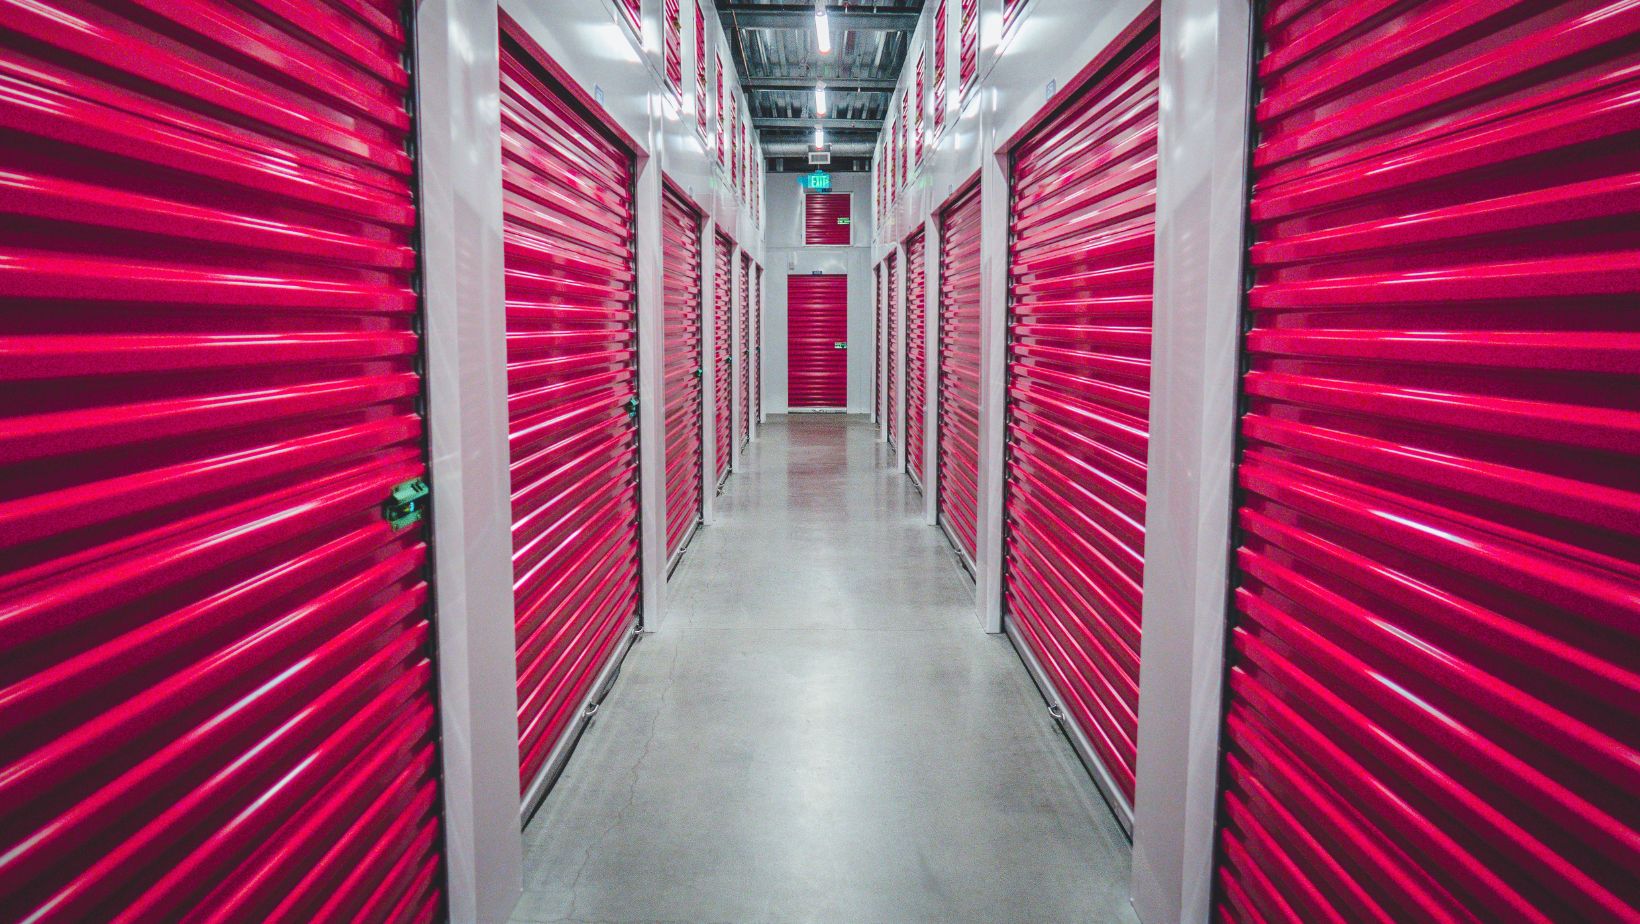 Hallway with red storage units